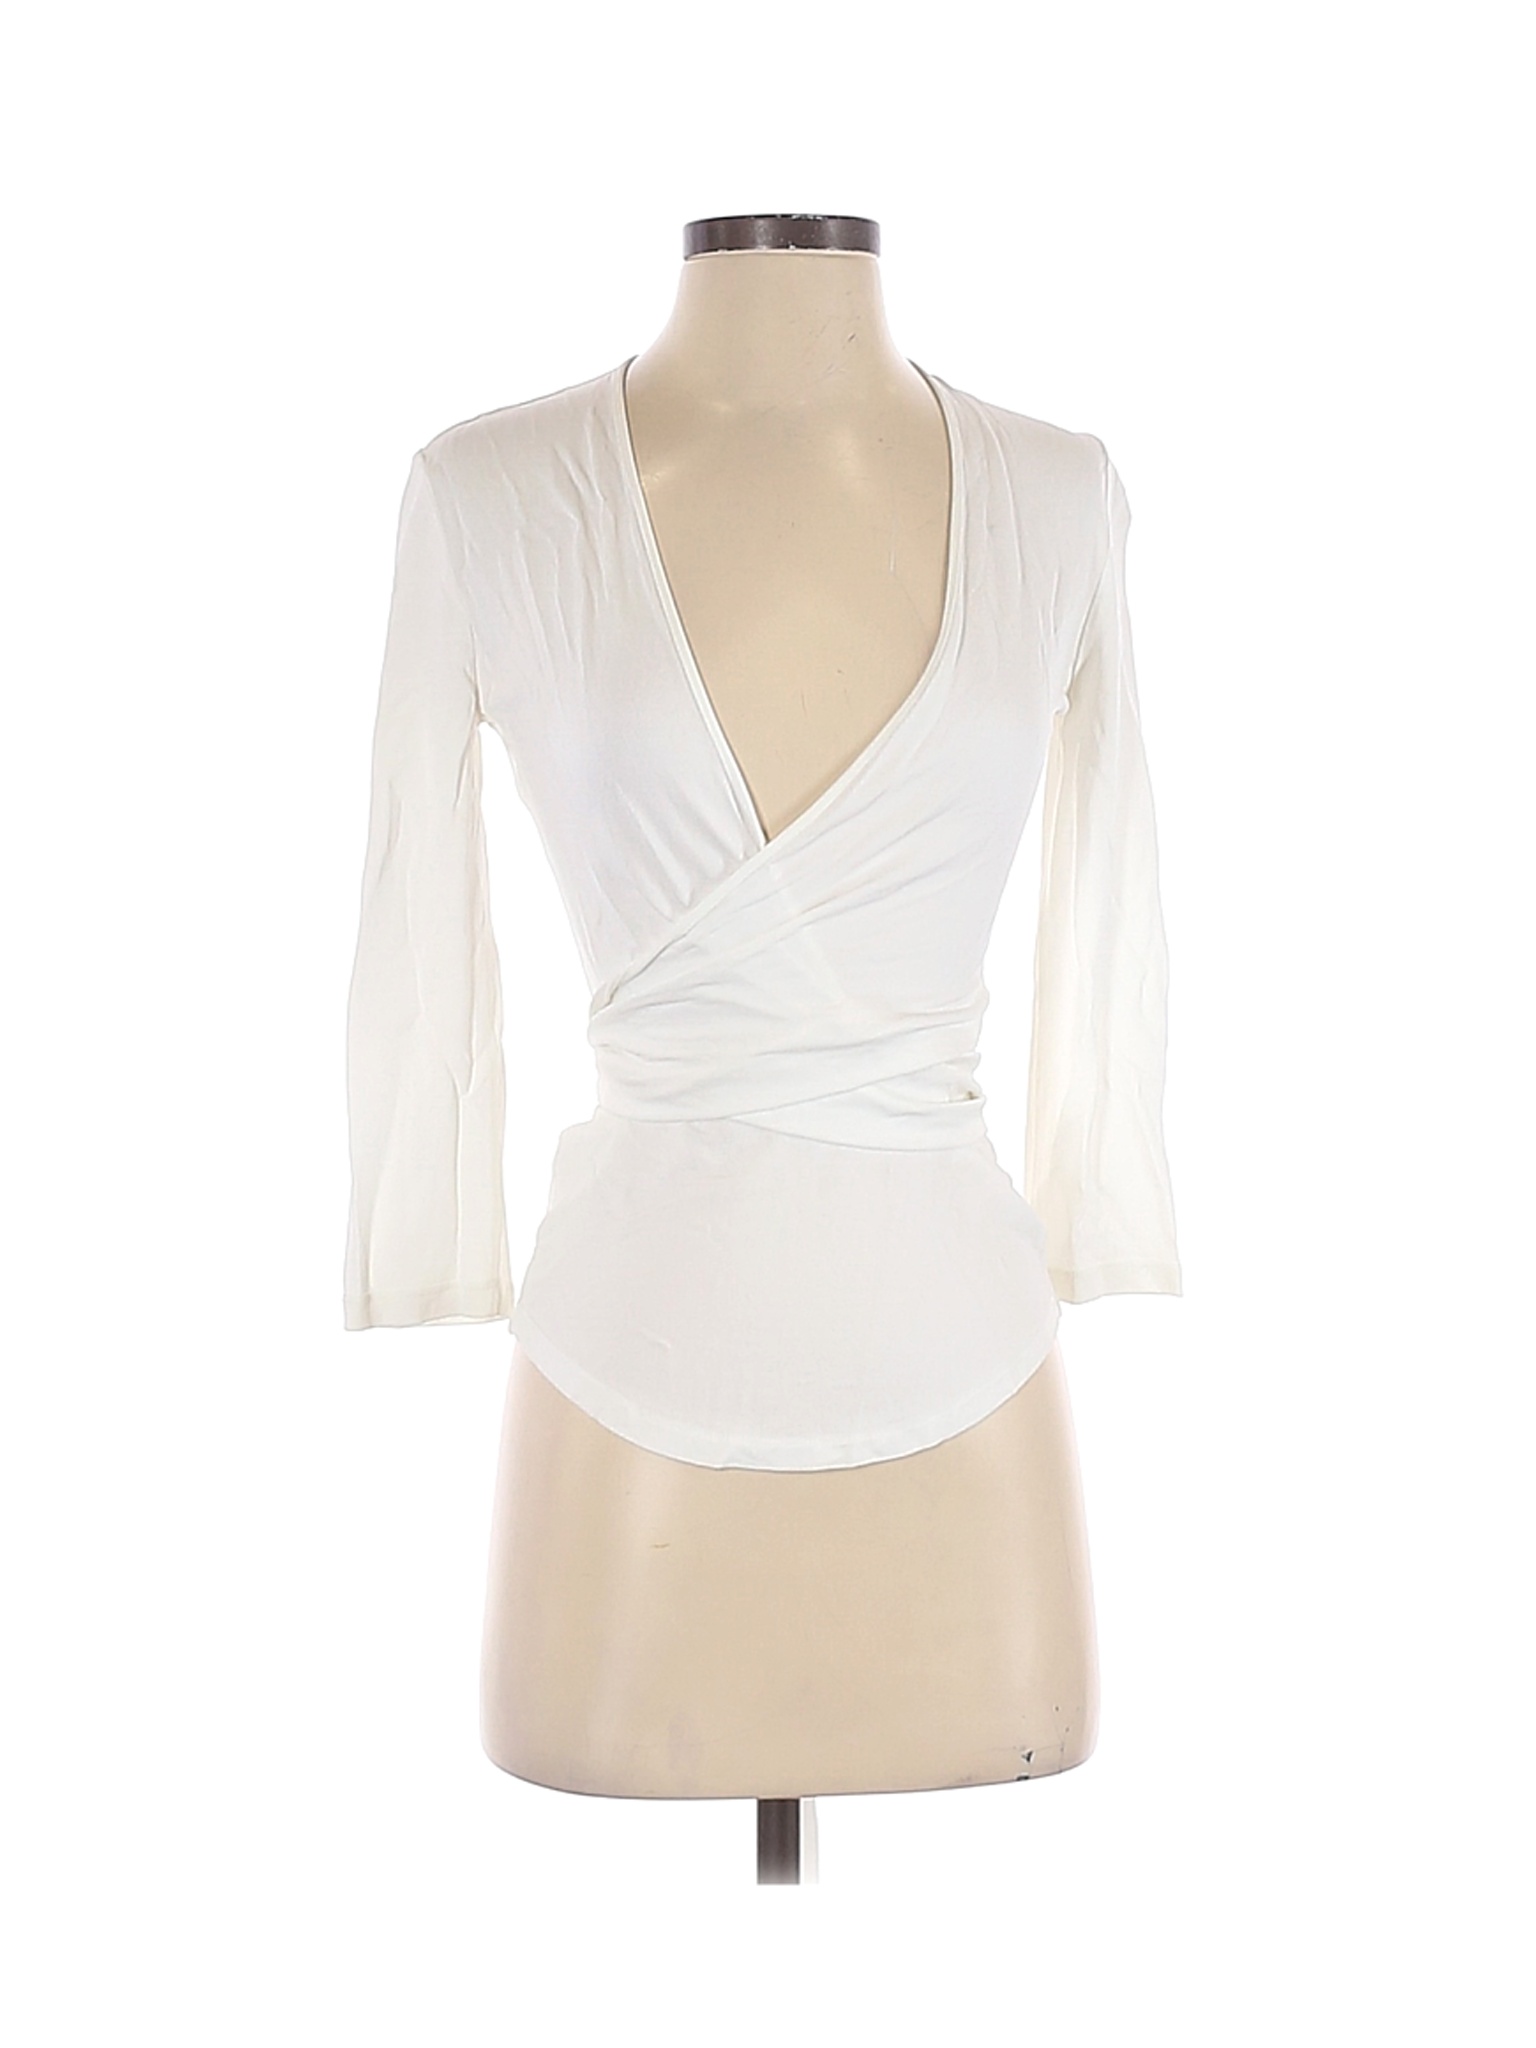 Givenchy Women White 3/4 Sleeve Blouse 36 eur | eBay